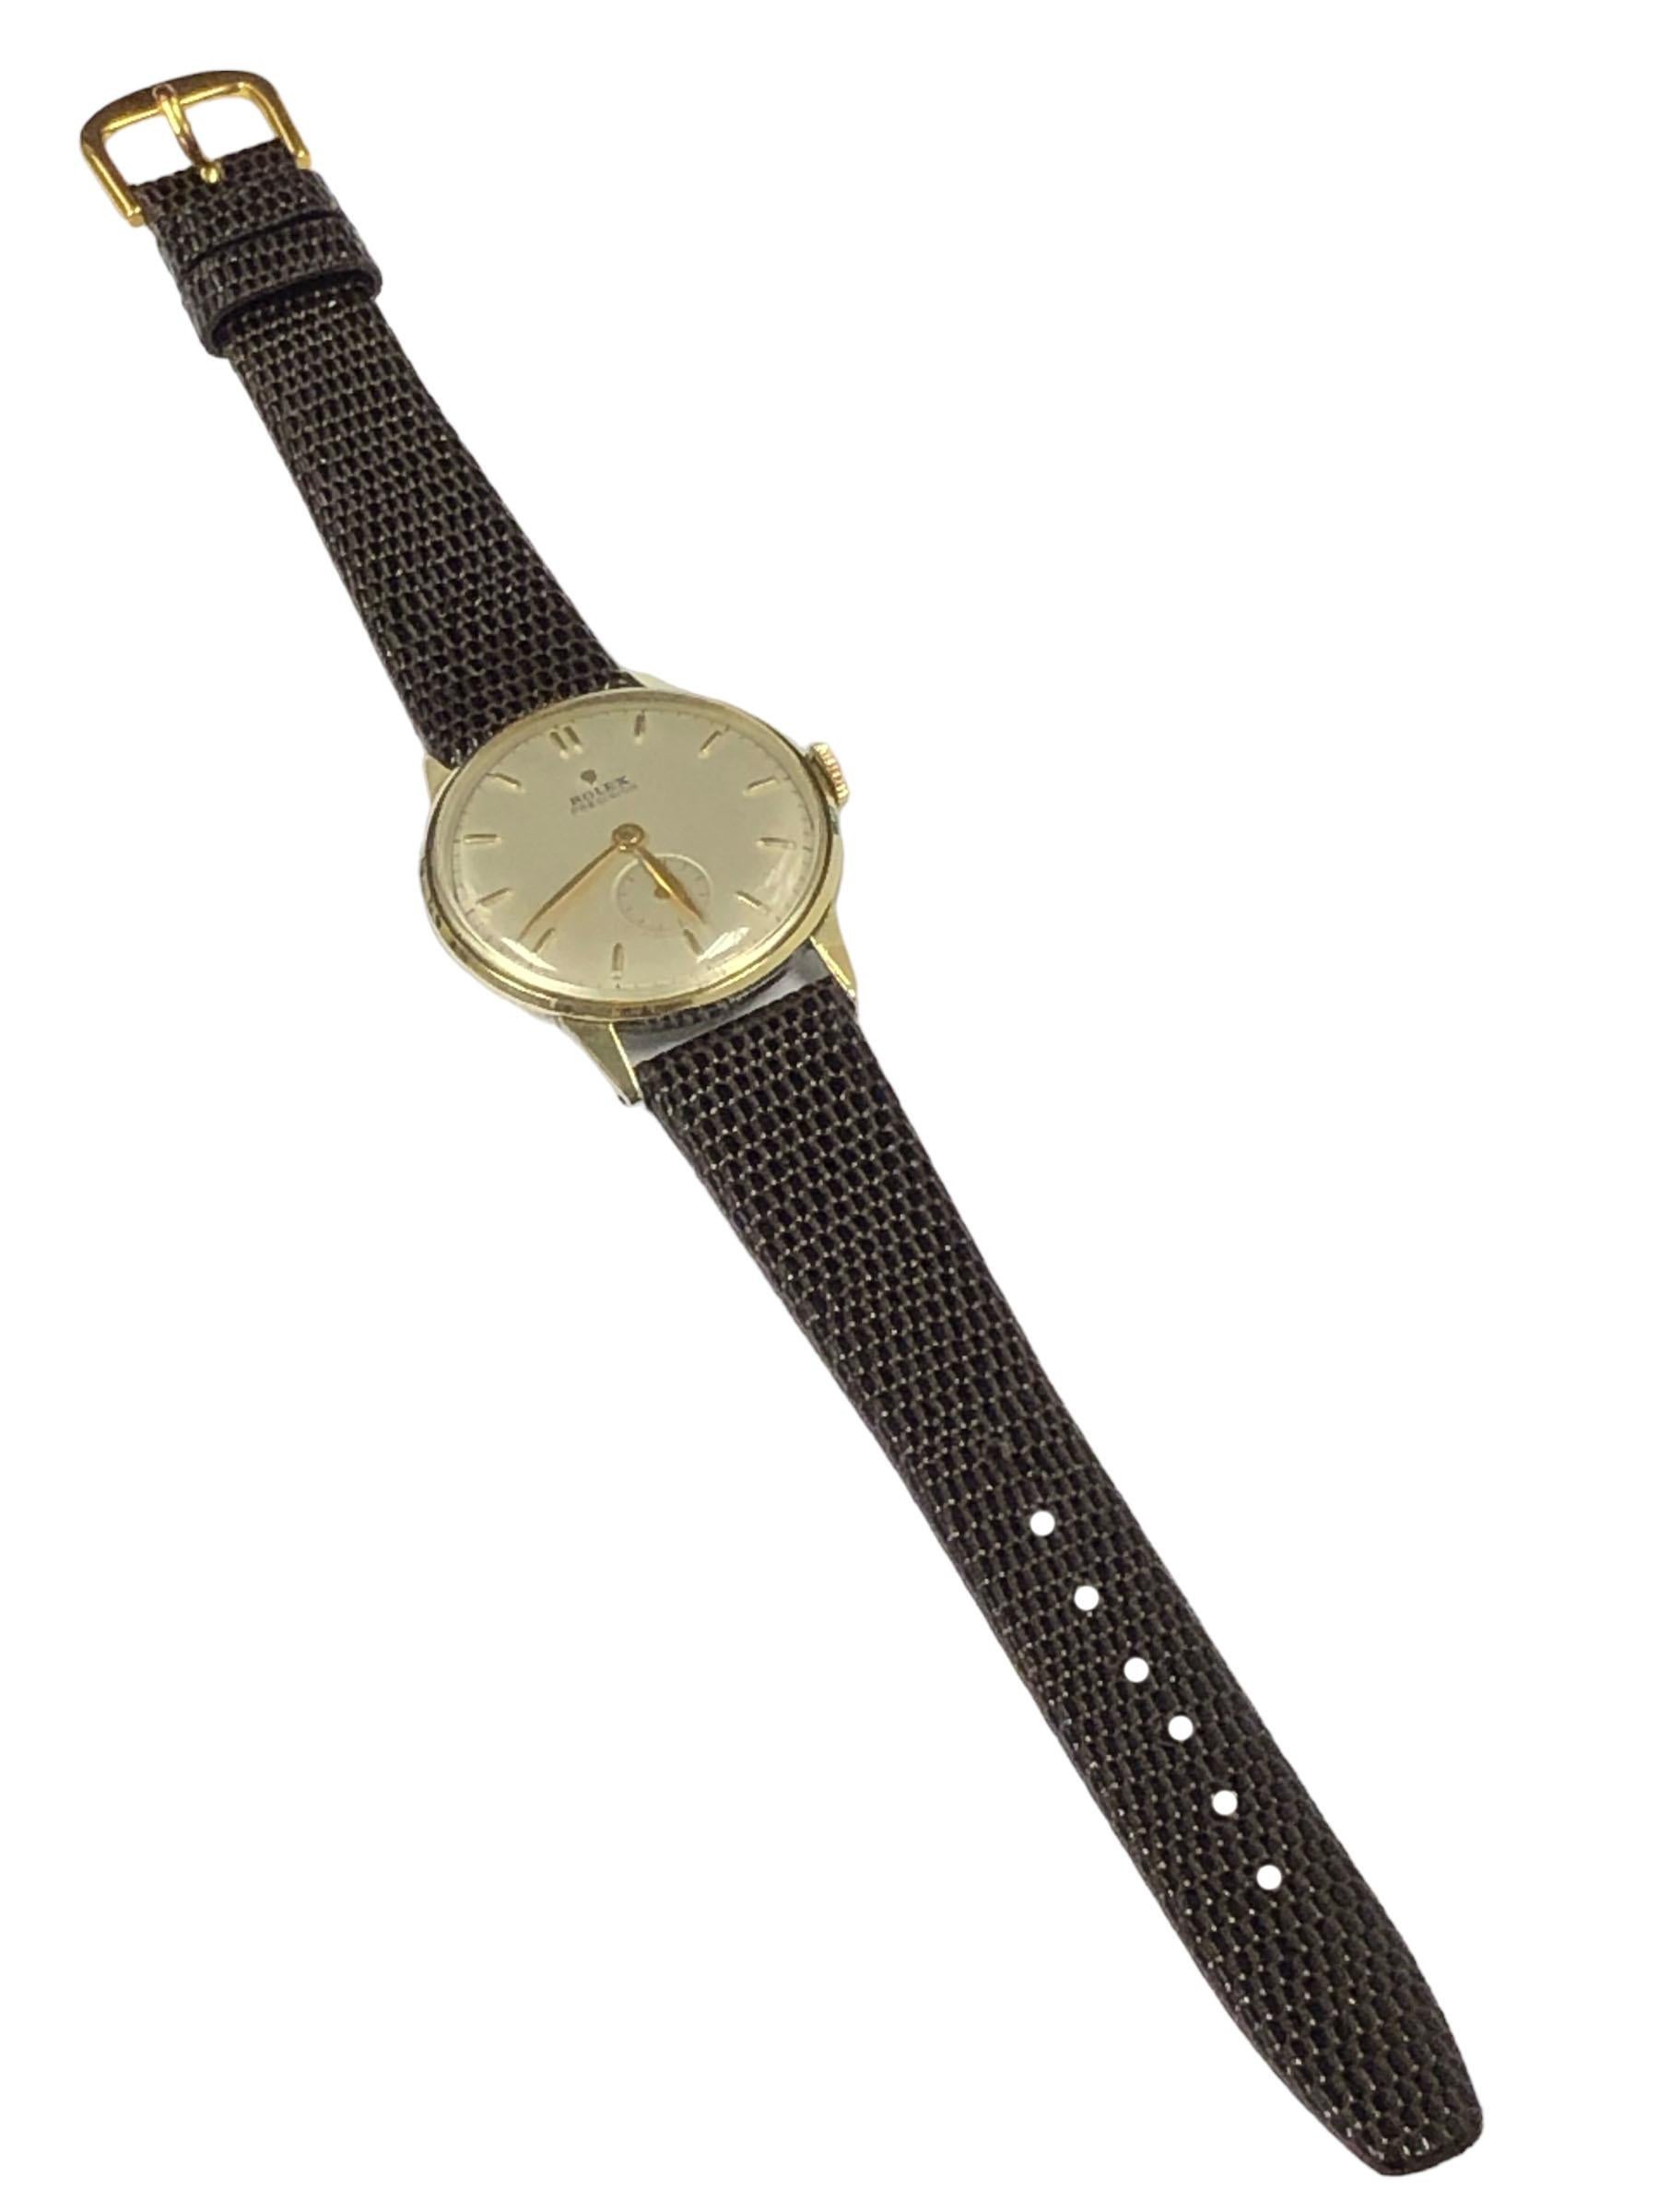 Rolex Vintage Gold Top and Steel back Larger Manual Wind Wrist Watch (Montre-bracelet à remontage manuel) en vente 1